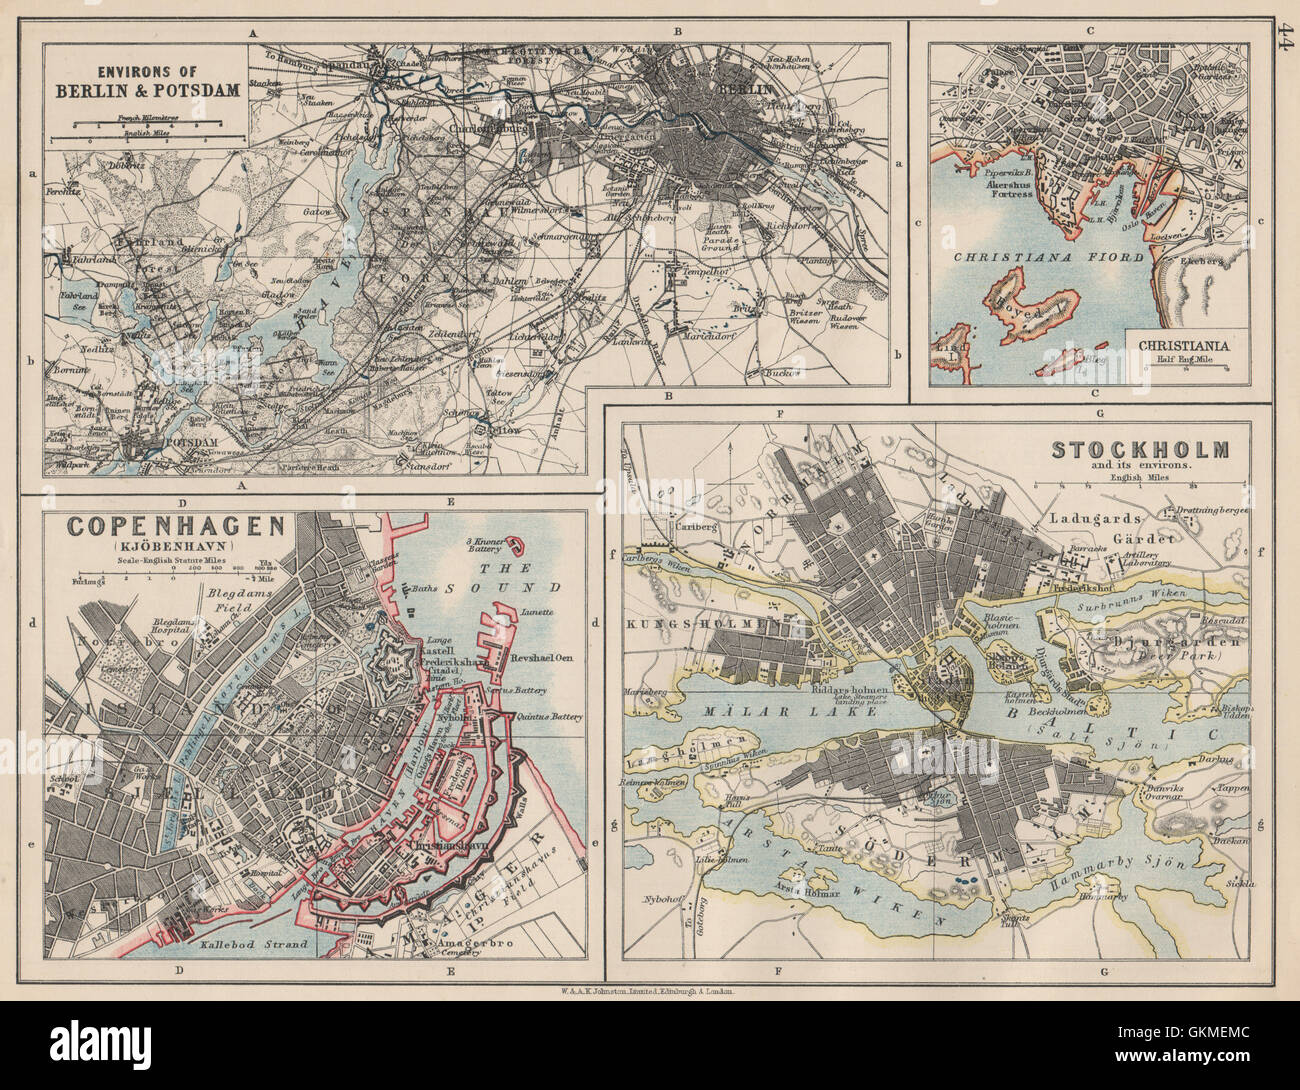 EUROPEAN CITIES. Berlin Copenhagen Stockholm Christiania/Oslo. JOHNSTON 1903 map Stock Photo